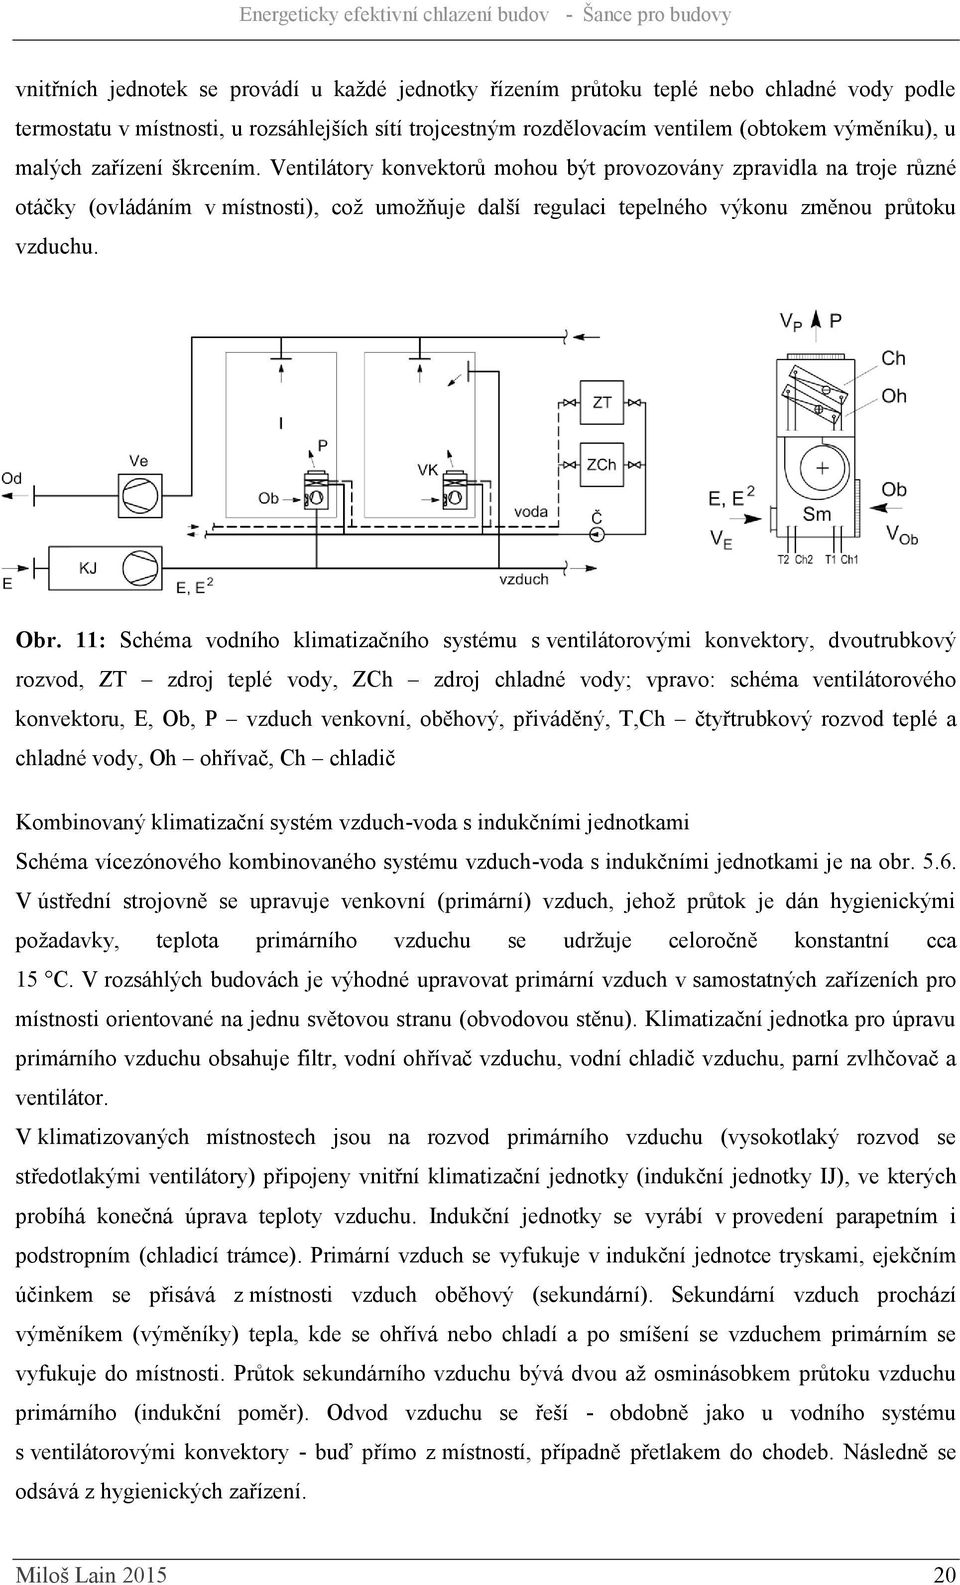 Obr. 11: Schéma vodního klimatizačního systému s ventilátorovými konvektory, dvoutrubkový rozvod, ZT zdroj teplé vody, ZCh zdroj chladné vody; vpravo: schéma ventilátorového konvektoru, E, Ob, P